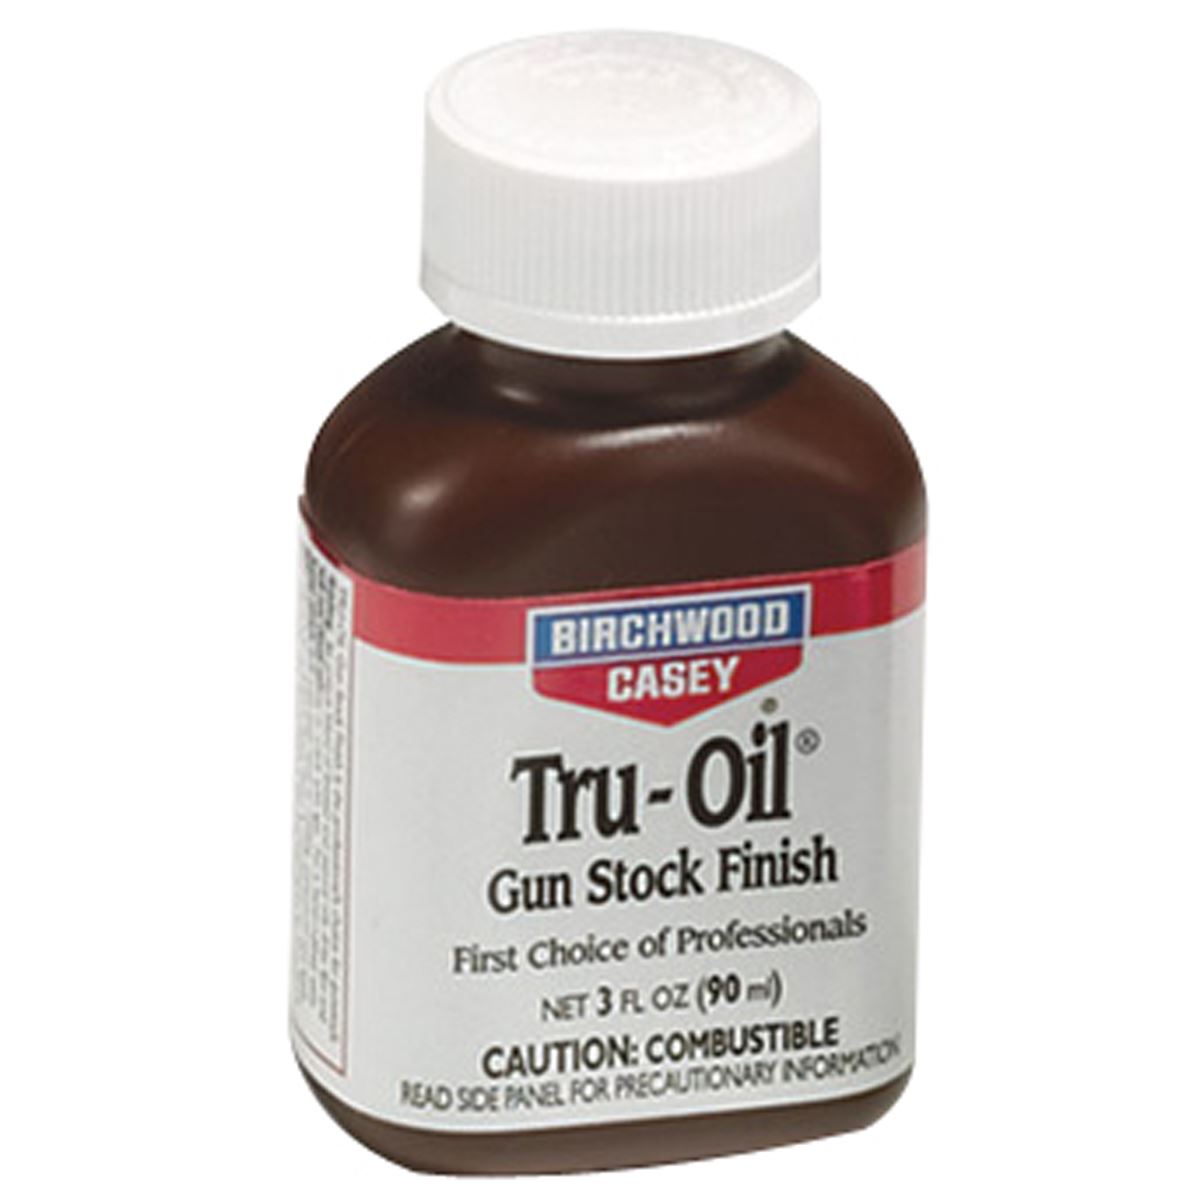 Where to buy Tru oil for my gun stock?